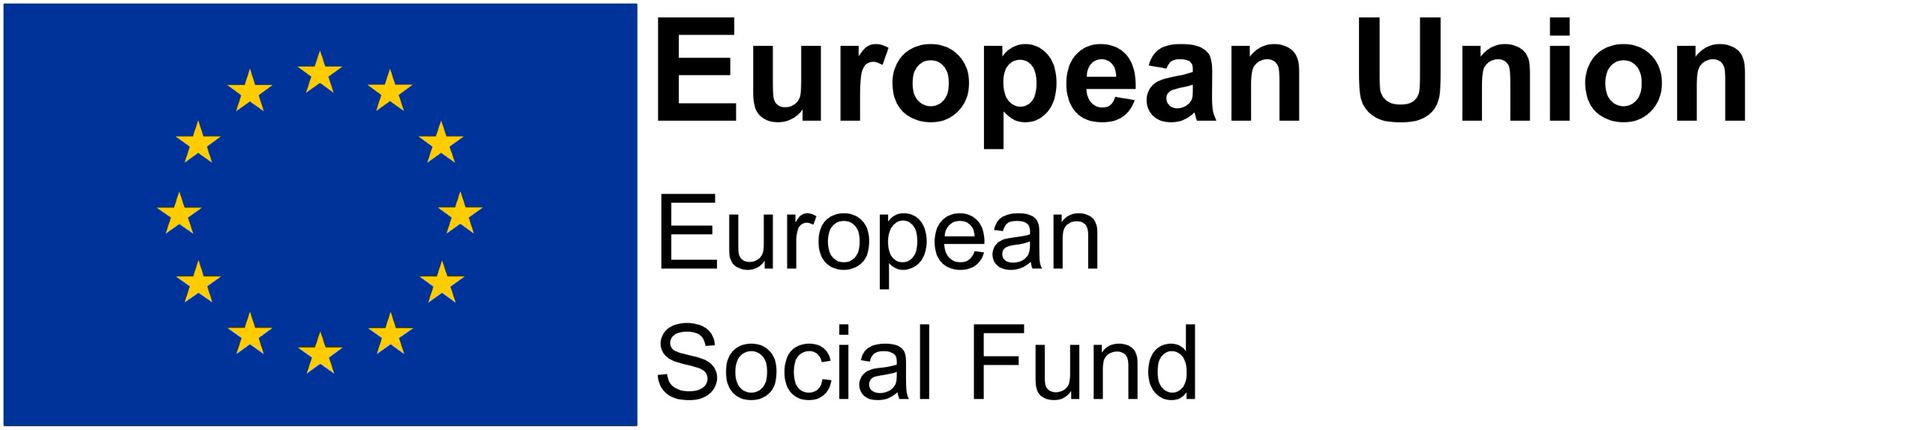 EU-social-fund-landscape